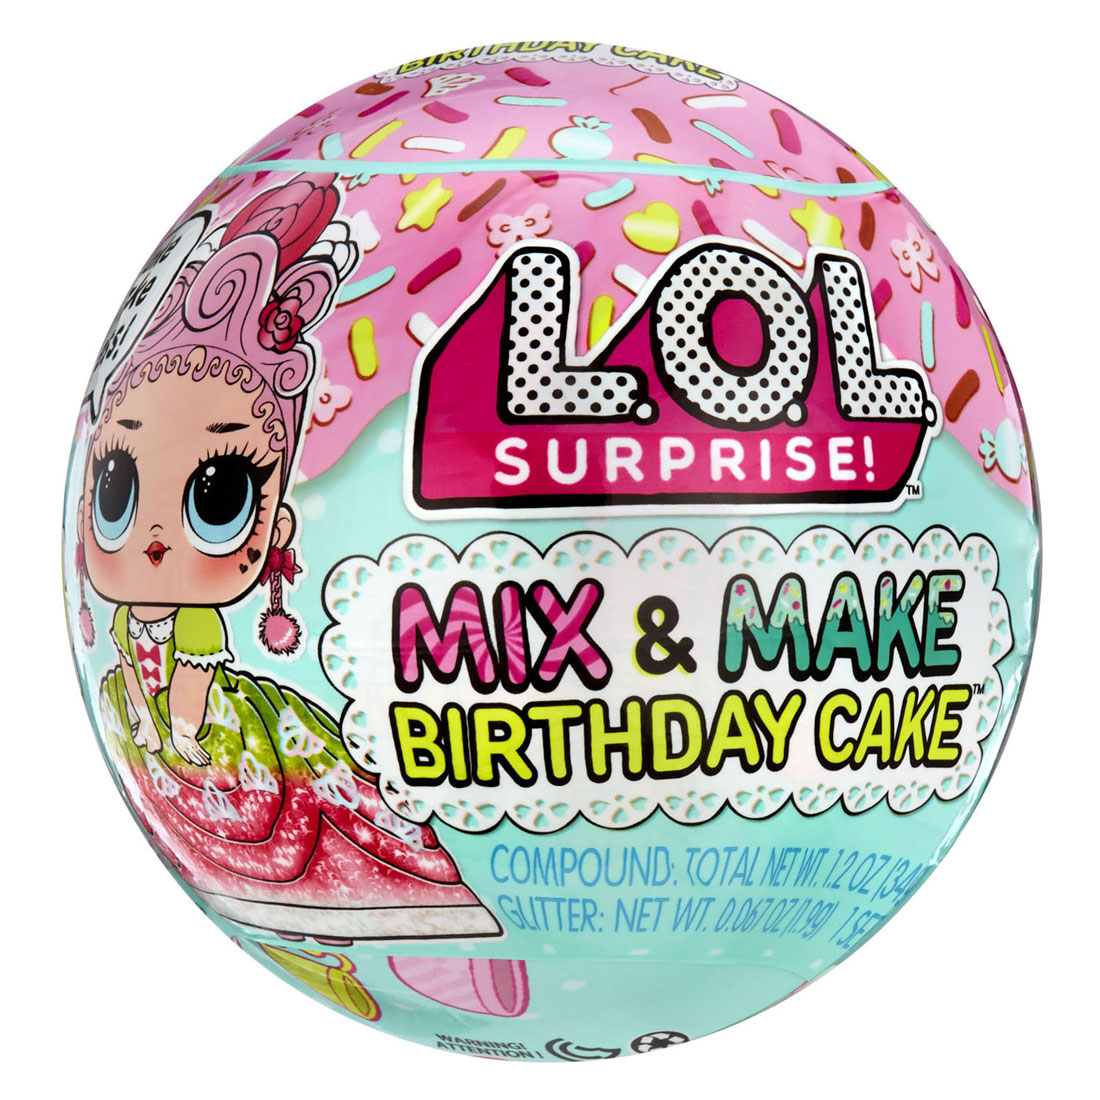 L.O.L. Surprise Mix & Make Birthday Mini Pop Bal